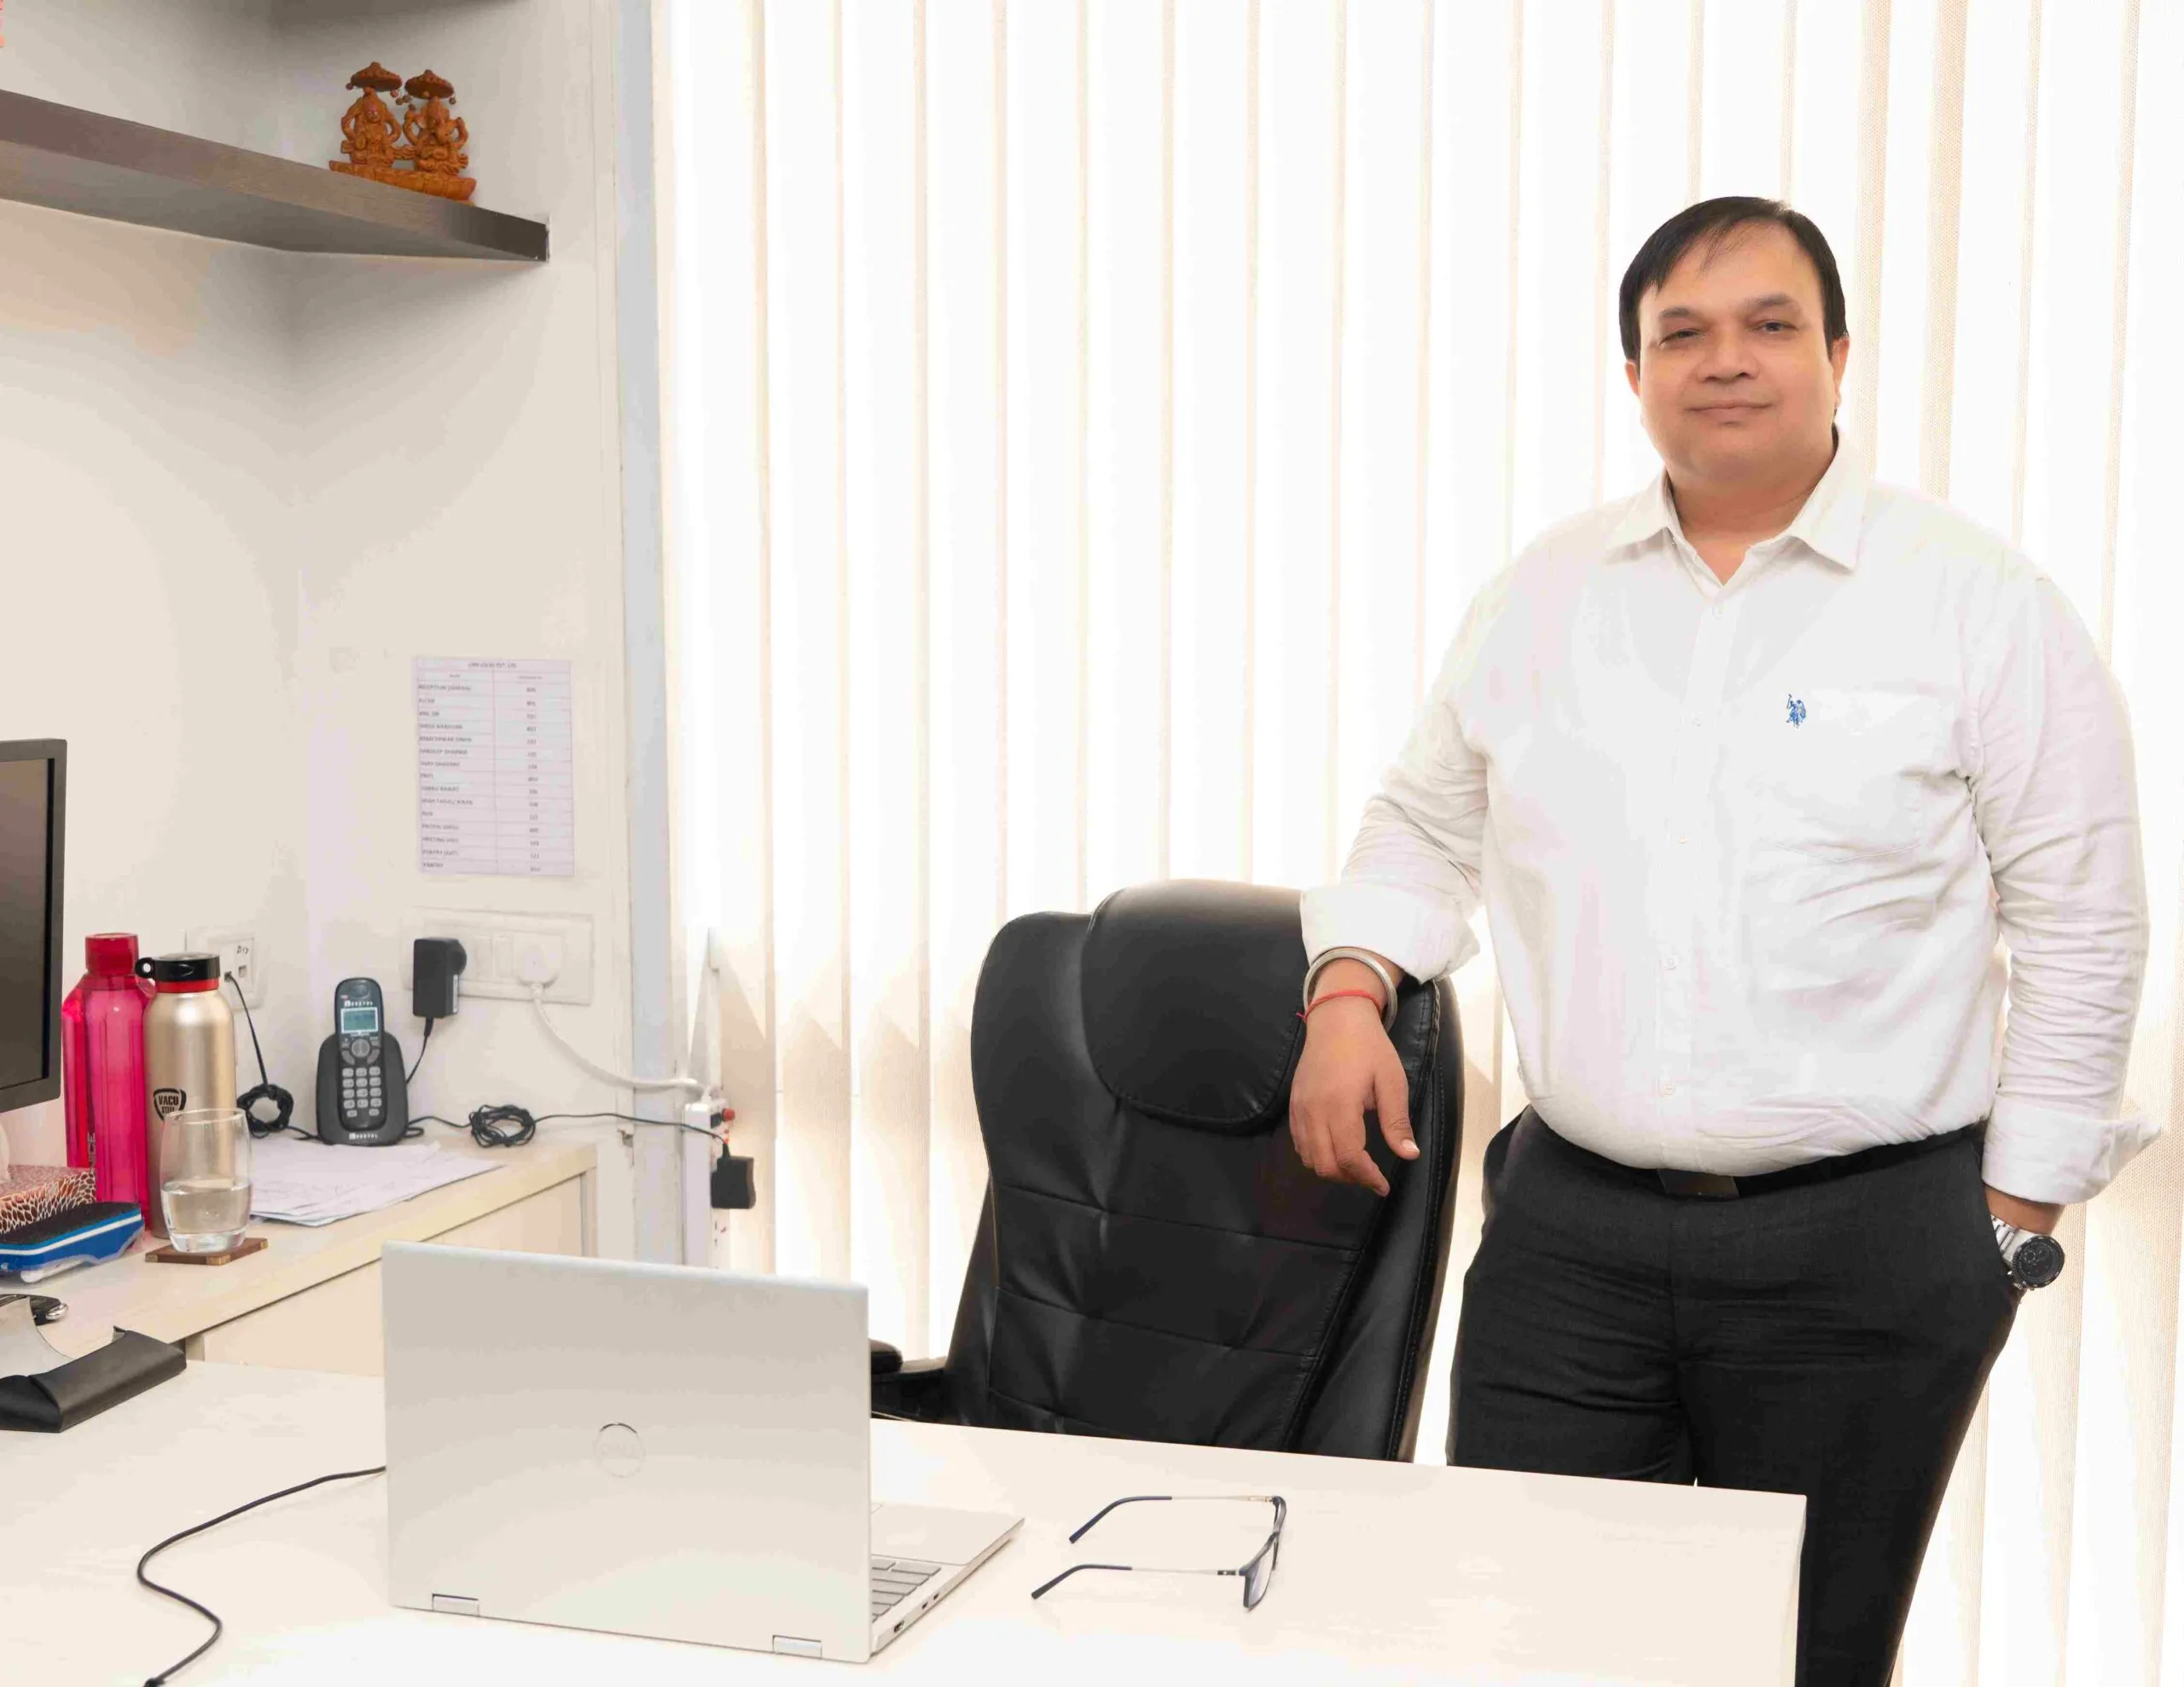 Mr. Anil Bhardwaj, President of Link Locks Pvt. Ltd. - premium manufacturers of smart lock, premium security solutions and locking technology